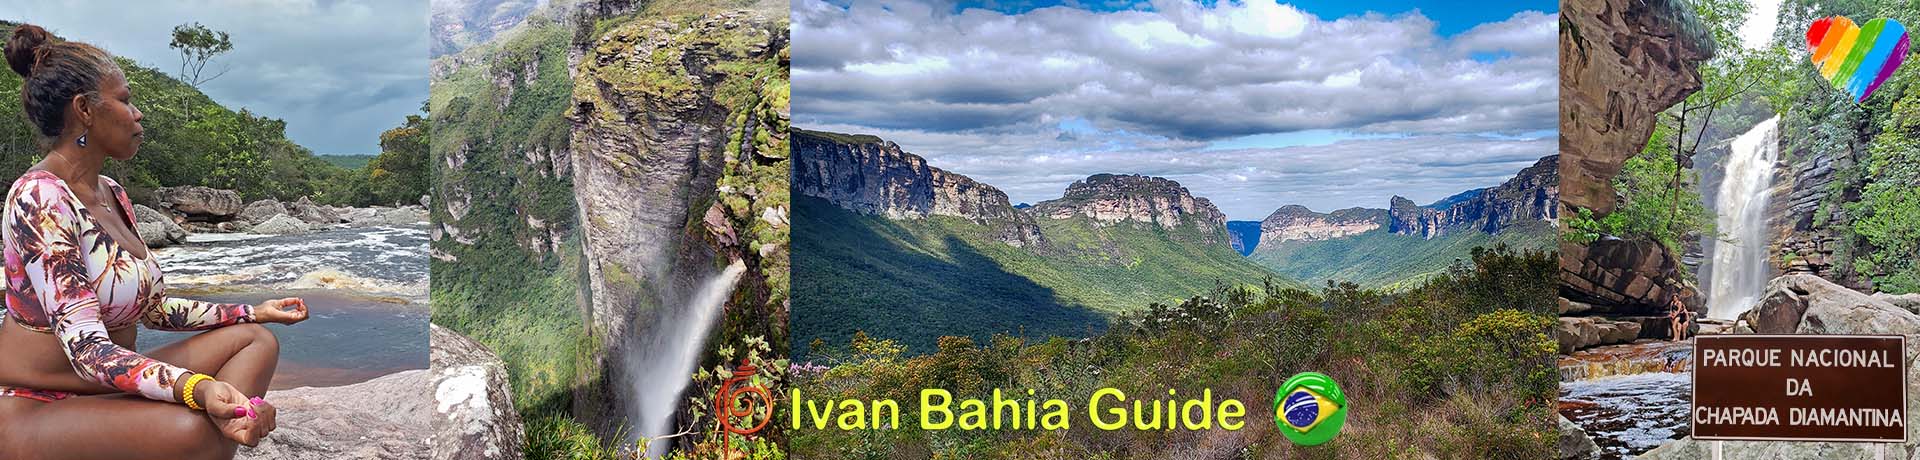 Ivan Bahia Guide - daytour from Salvador : Chapada Diamantina National Park in 1 day